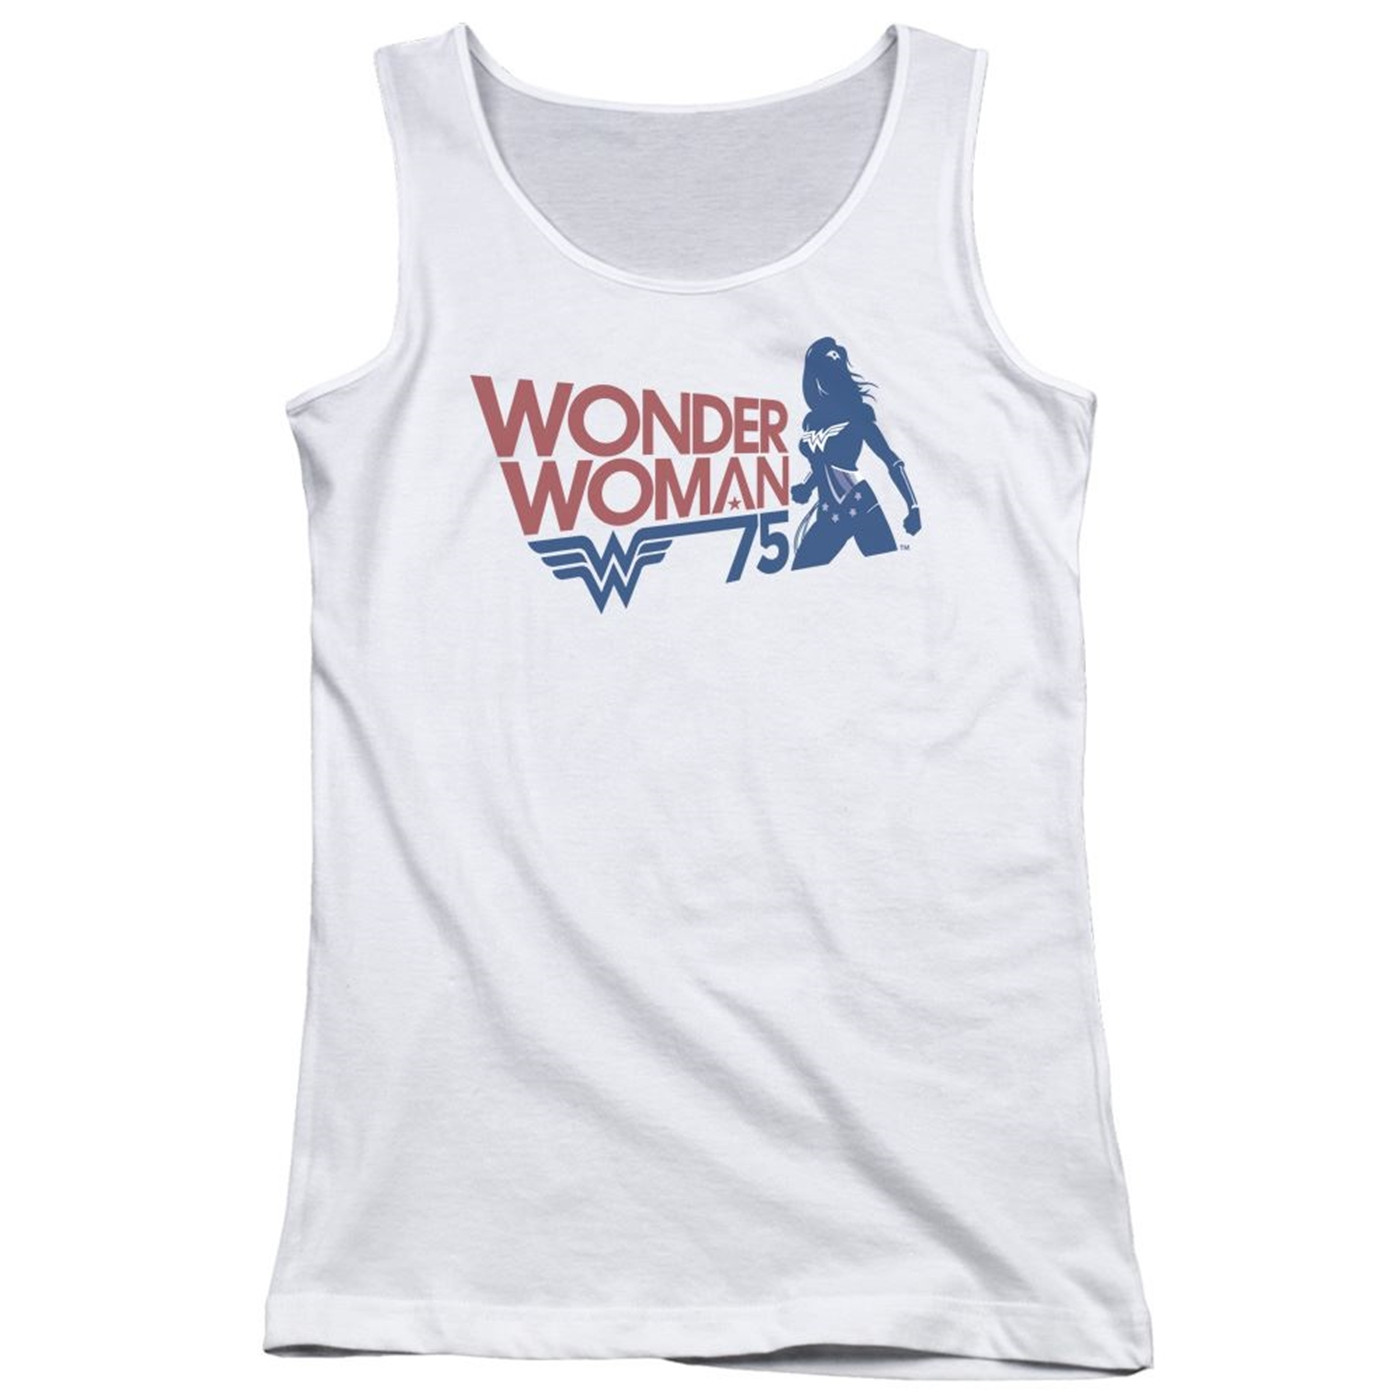 Wonder Woman 75 Silhouette Women's Tank Top